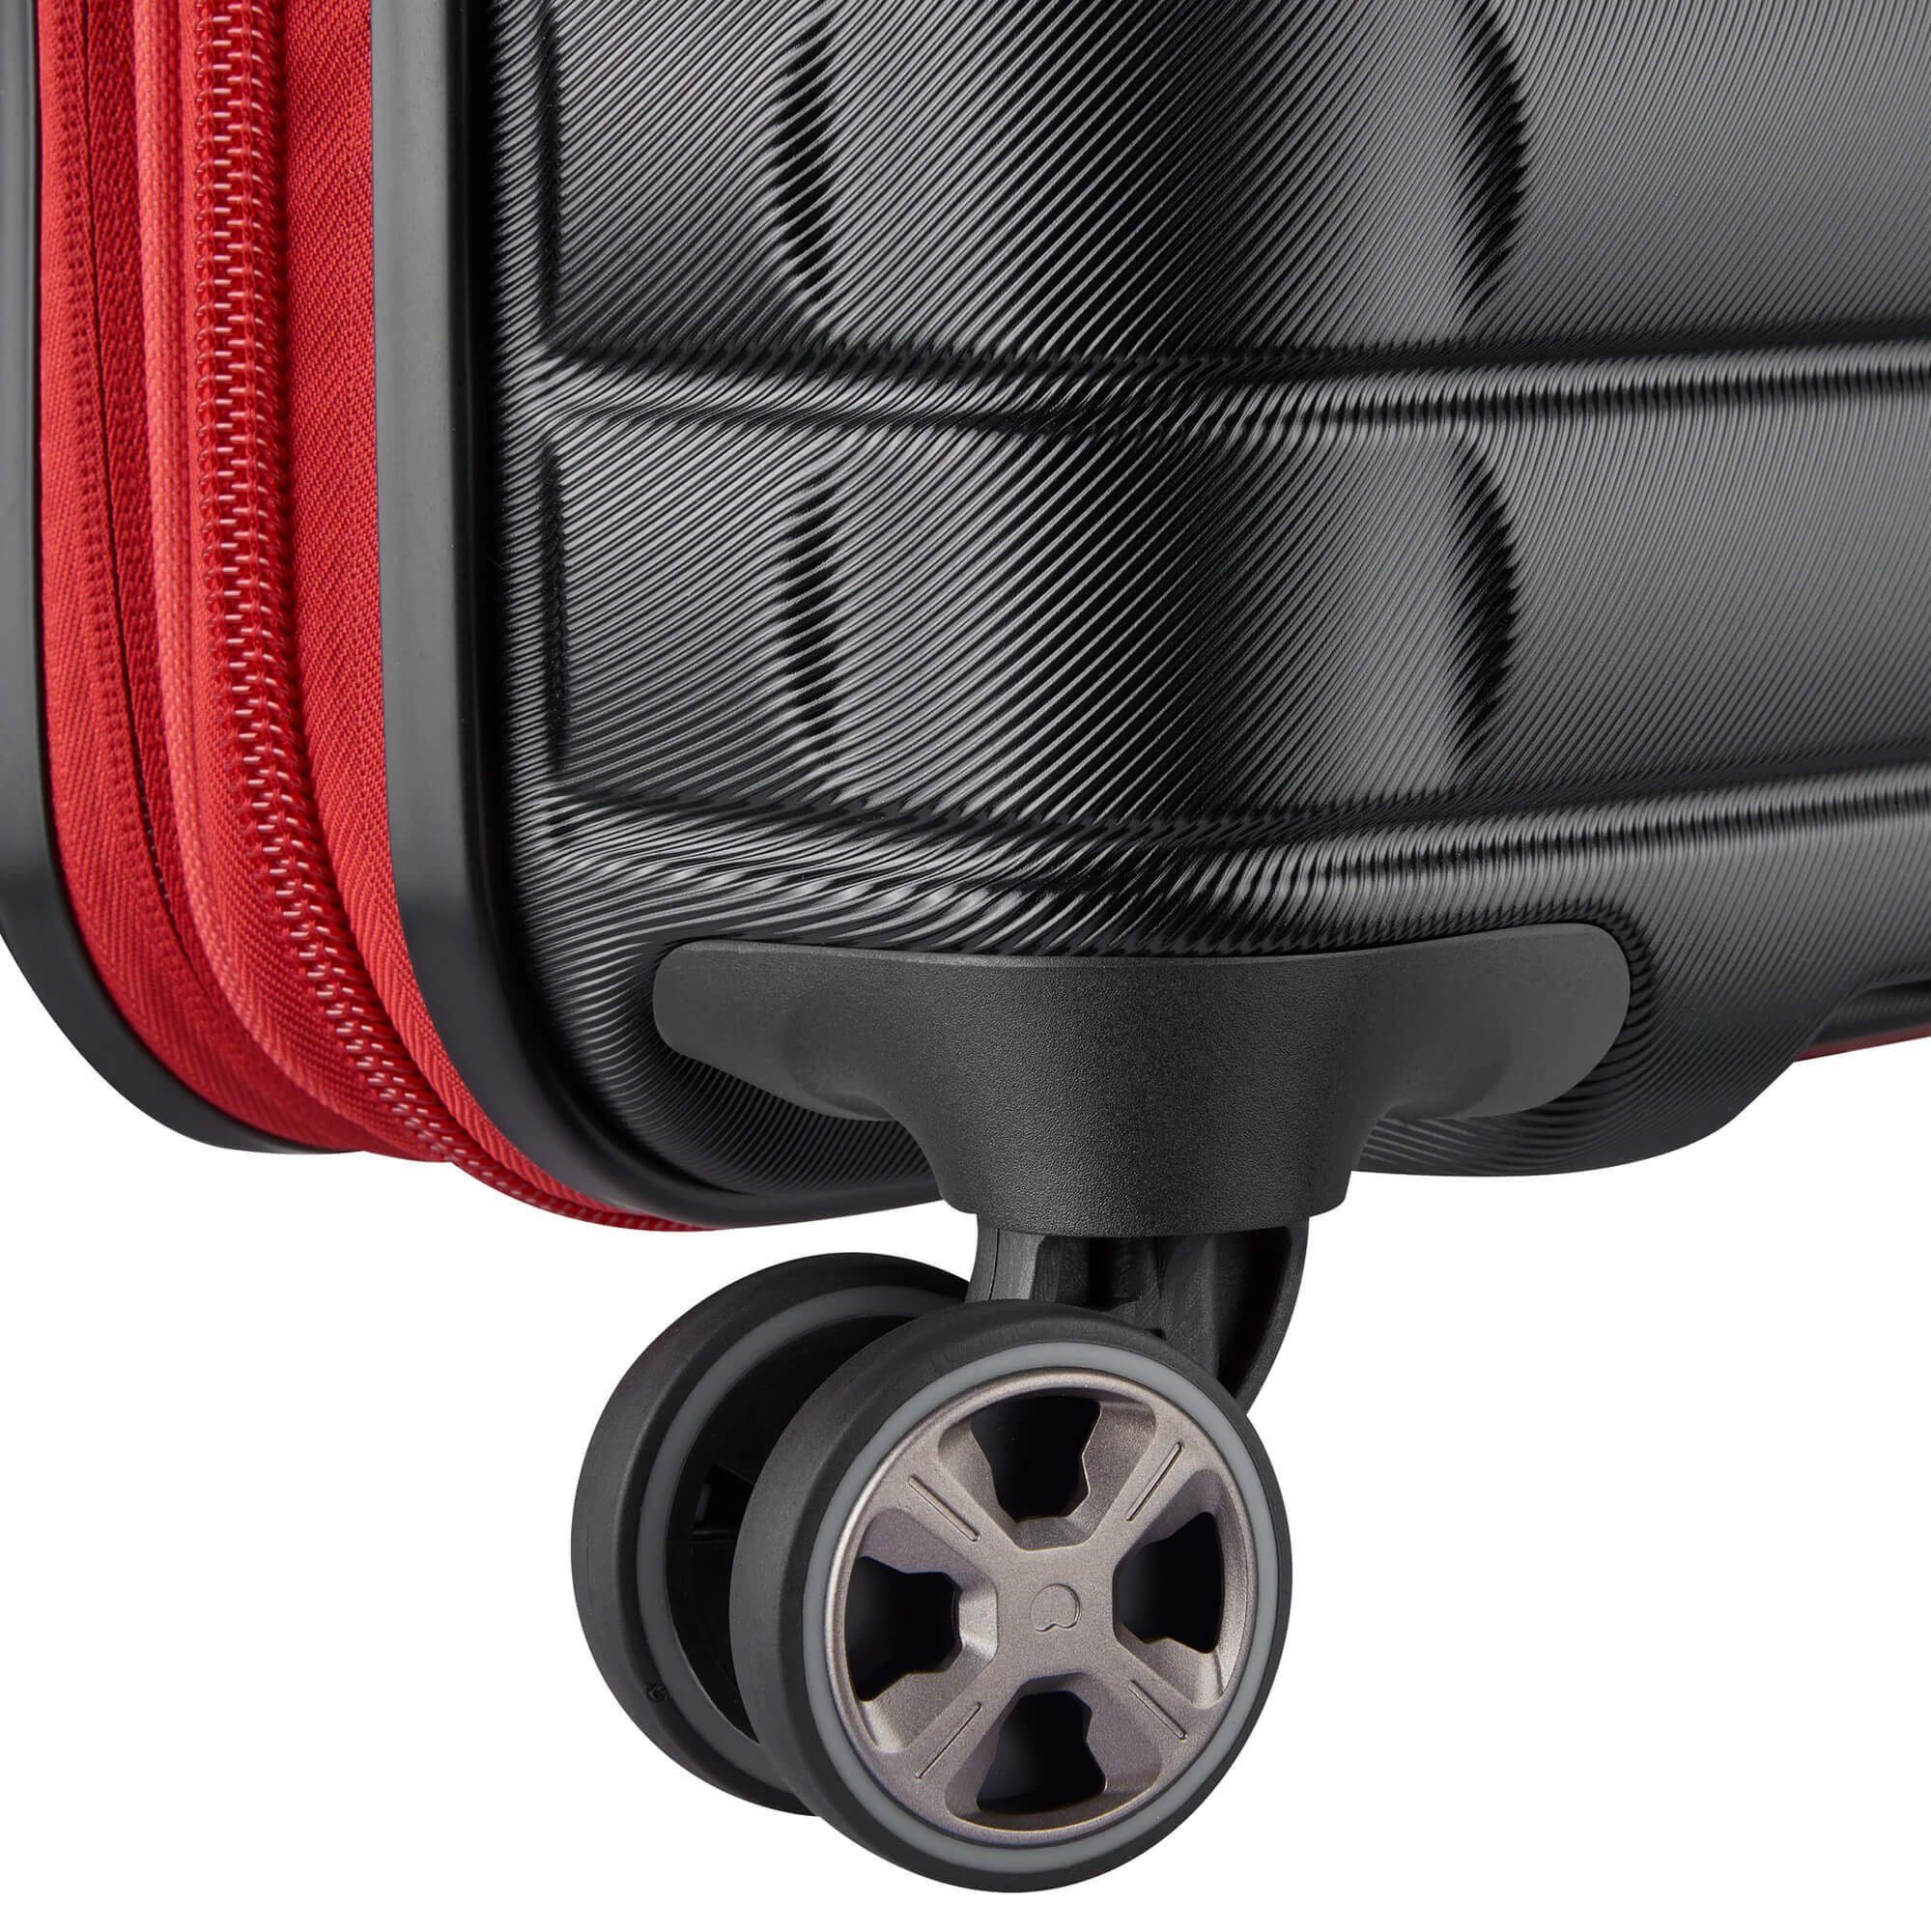 Shadow USB 5.0 Handgepäck-Trolley schwarz/rot 4 Delsey Rollen 55 cm, 4-Rollen-Kabinentrolley - Rollen